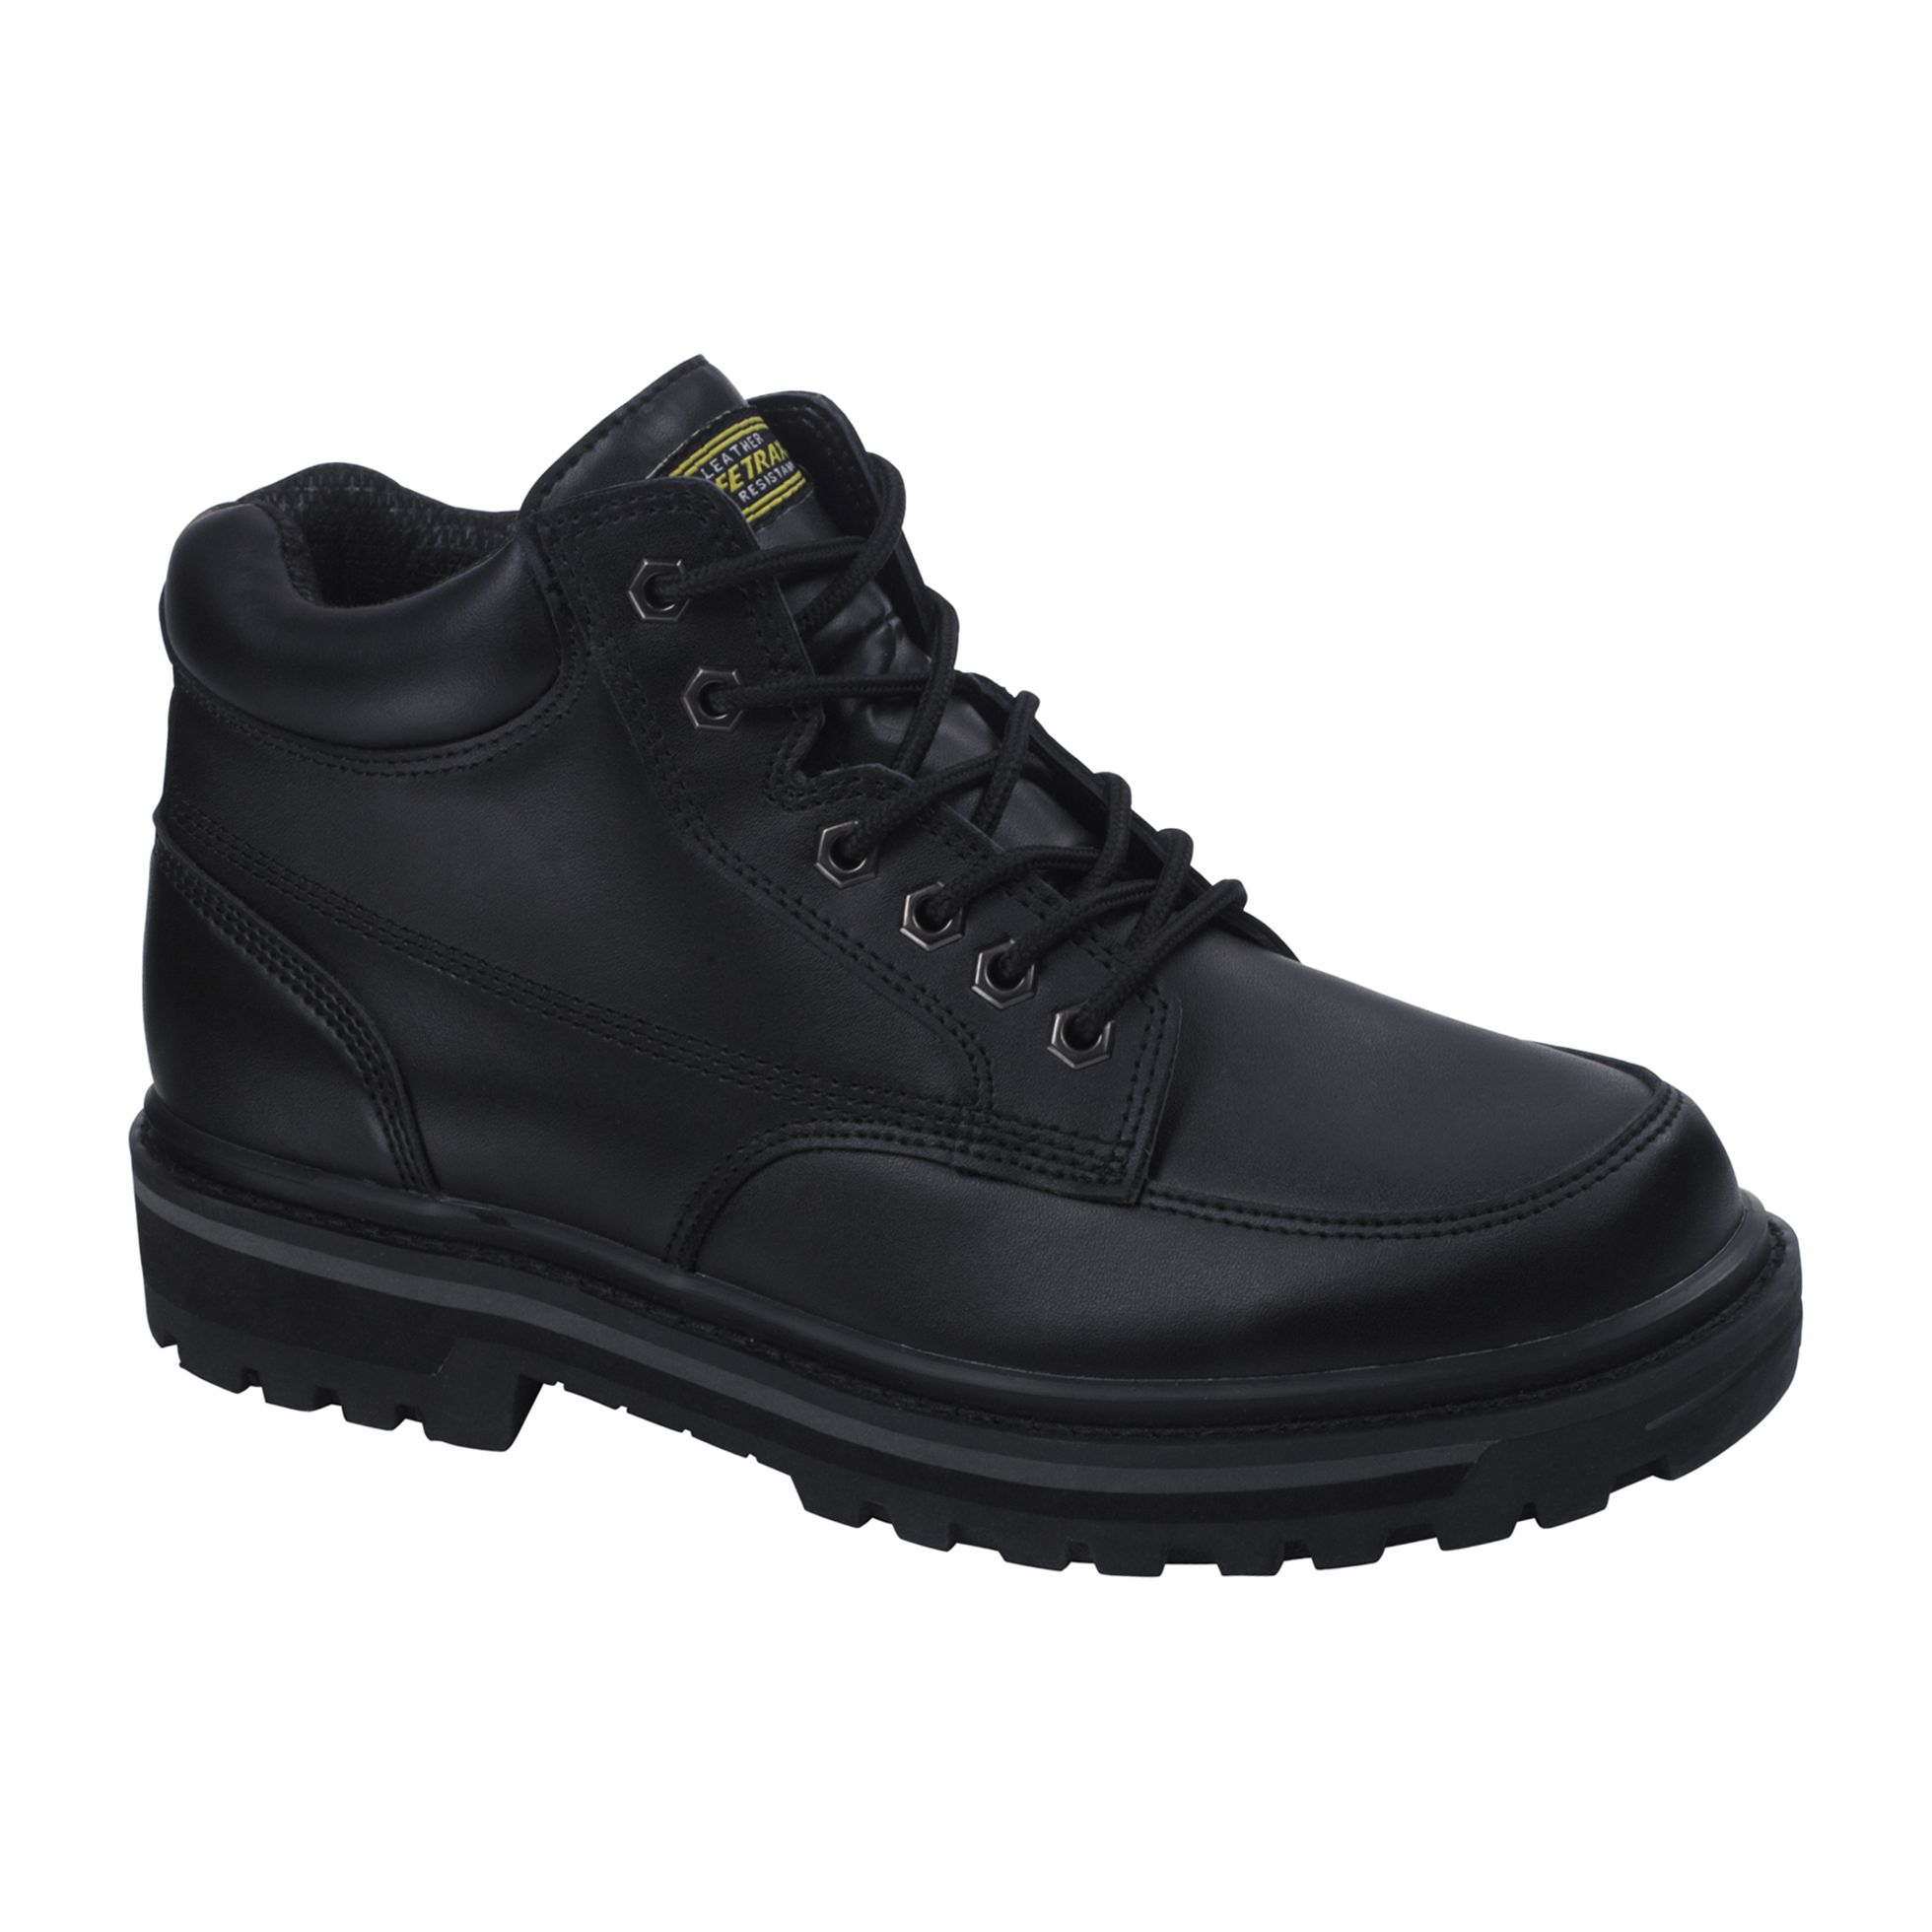 Safetrax Men's Karr Non-Skid Boot - Black